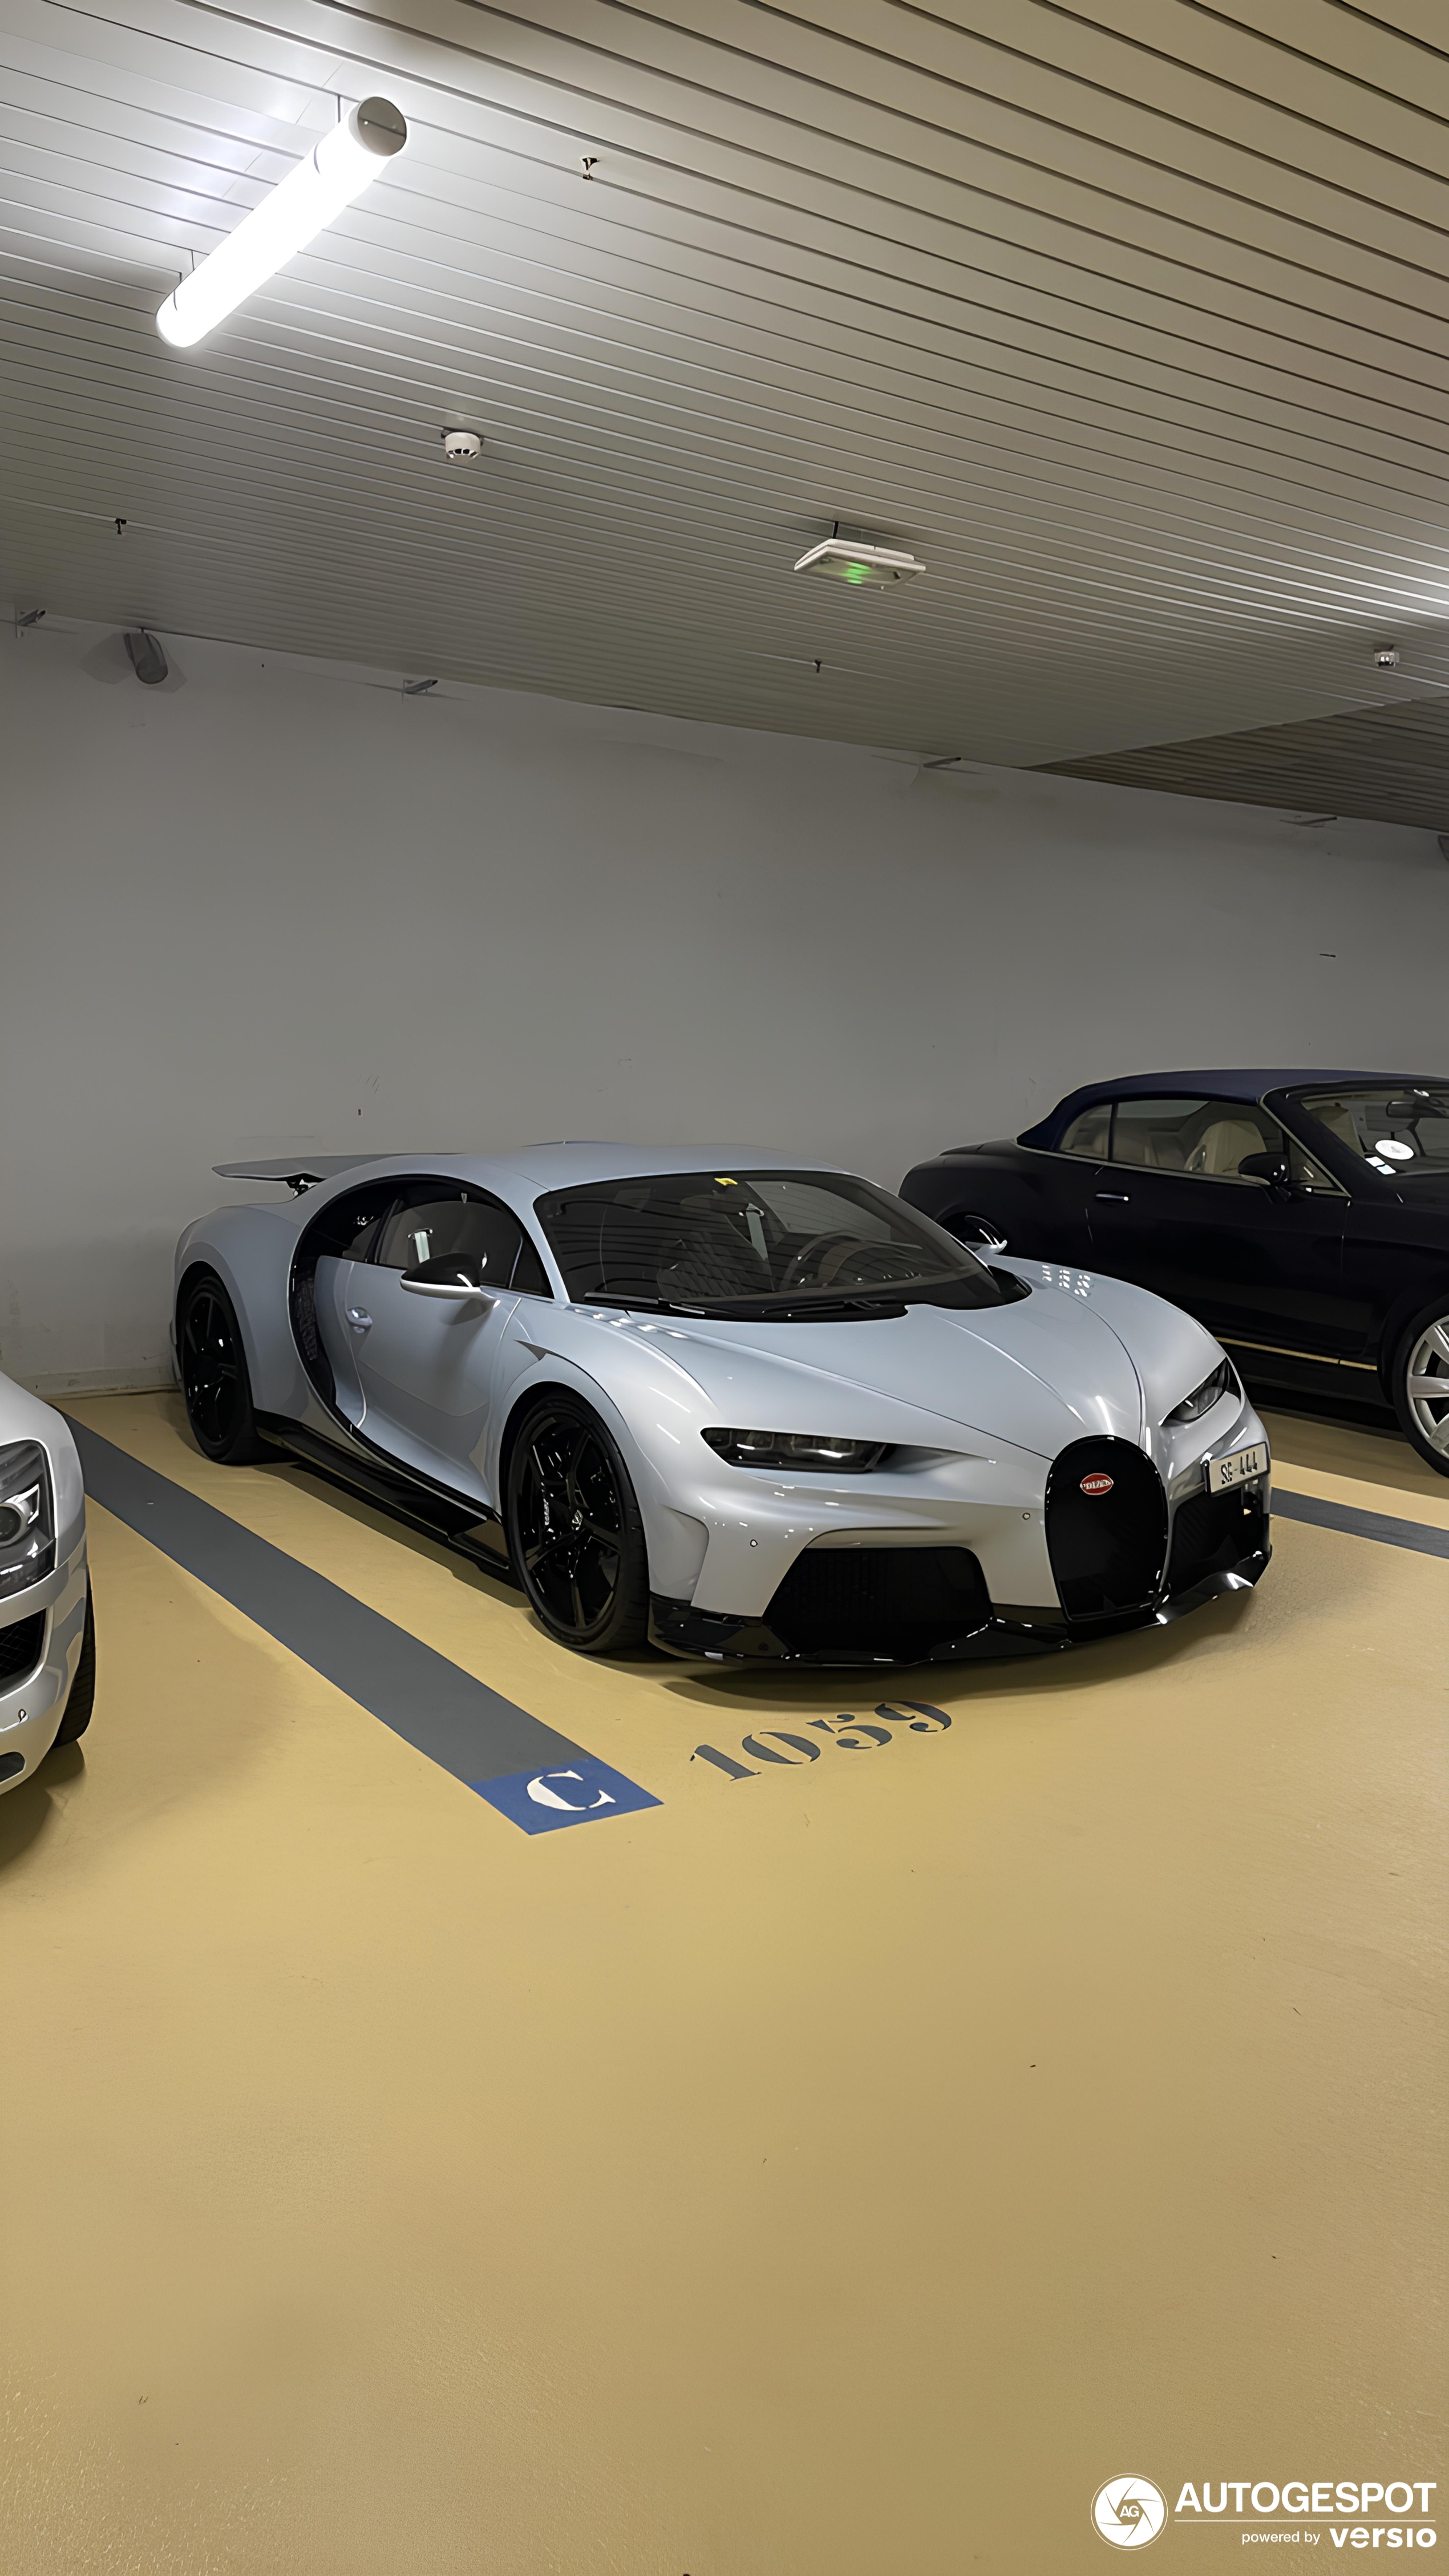 A Bugatti that we already know shows up in Monaco